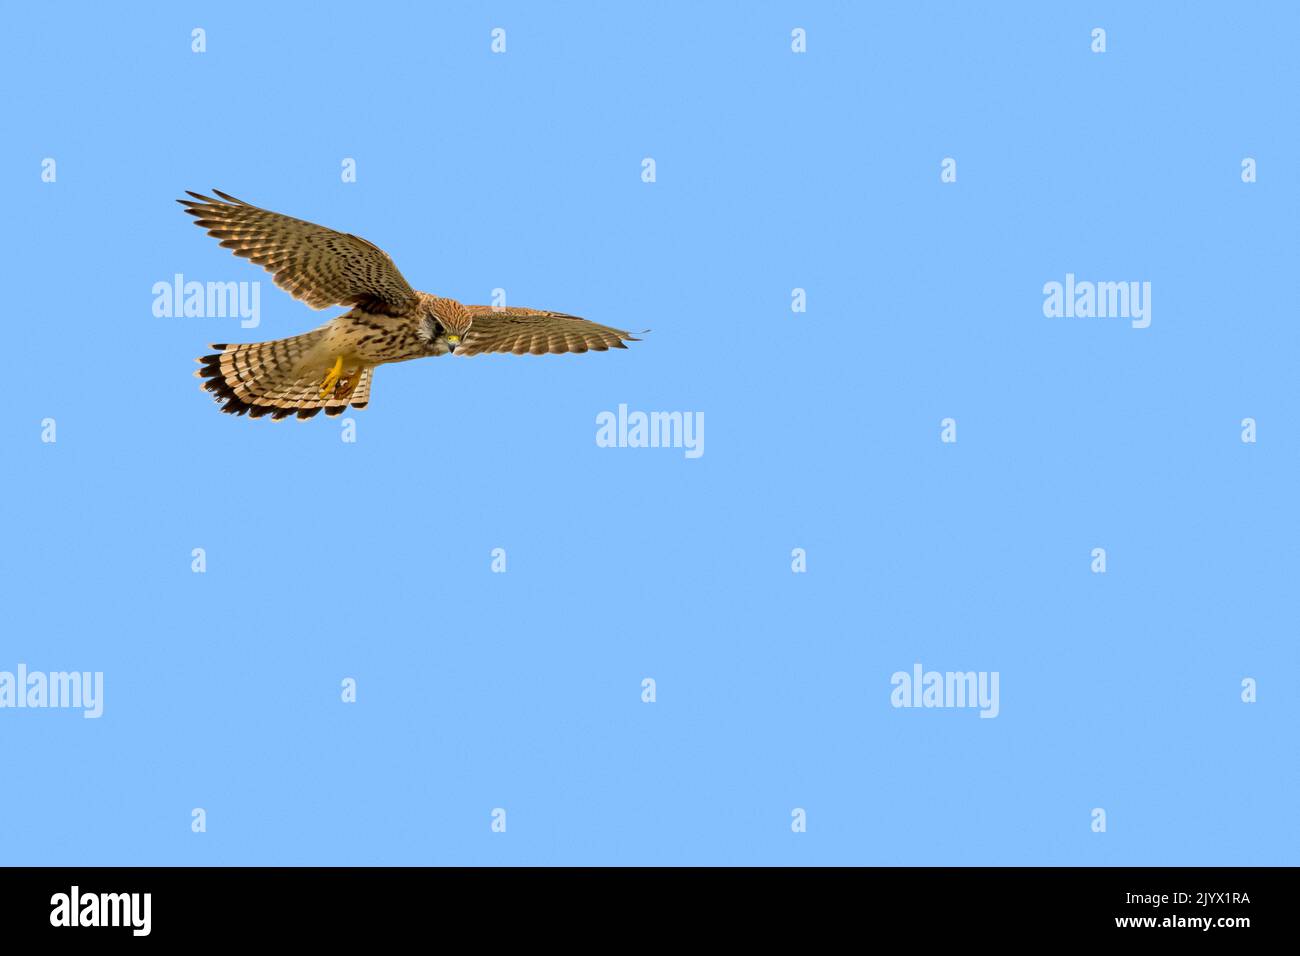 Kestrel común / kestrel europeo / kestrel euroasiático (Falco tinnunculus) hembra en vuelo, flotando con las plumas de la cola esparcidas, buscando presa abajo Foto de stock